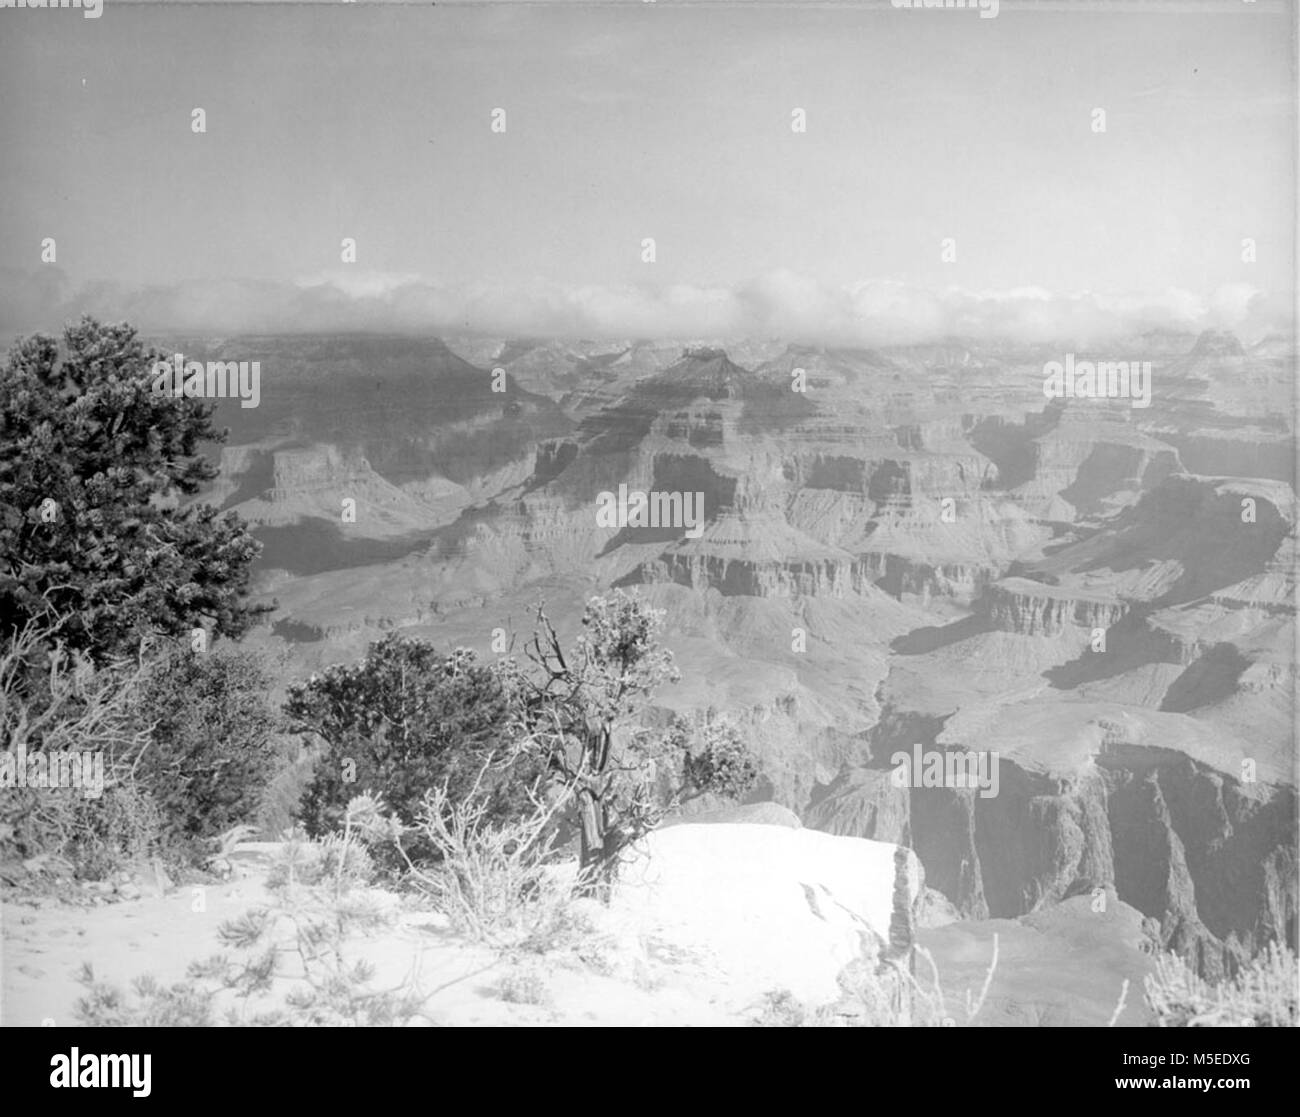 Grand Canyon Punto Hopi escena de nieve, el Borde Sur del Gran Cañón, DE RIM A CORTA DISTANCIA AL ESTE DEL PUNTO Hopi. CIRCA 1953. Foto de stock